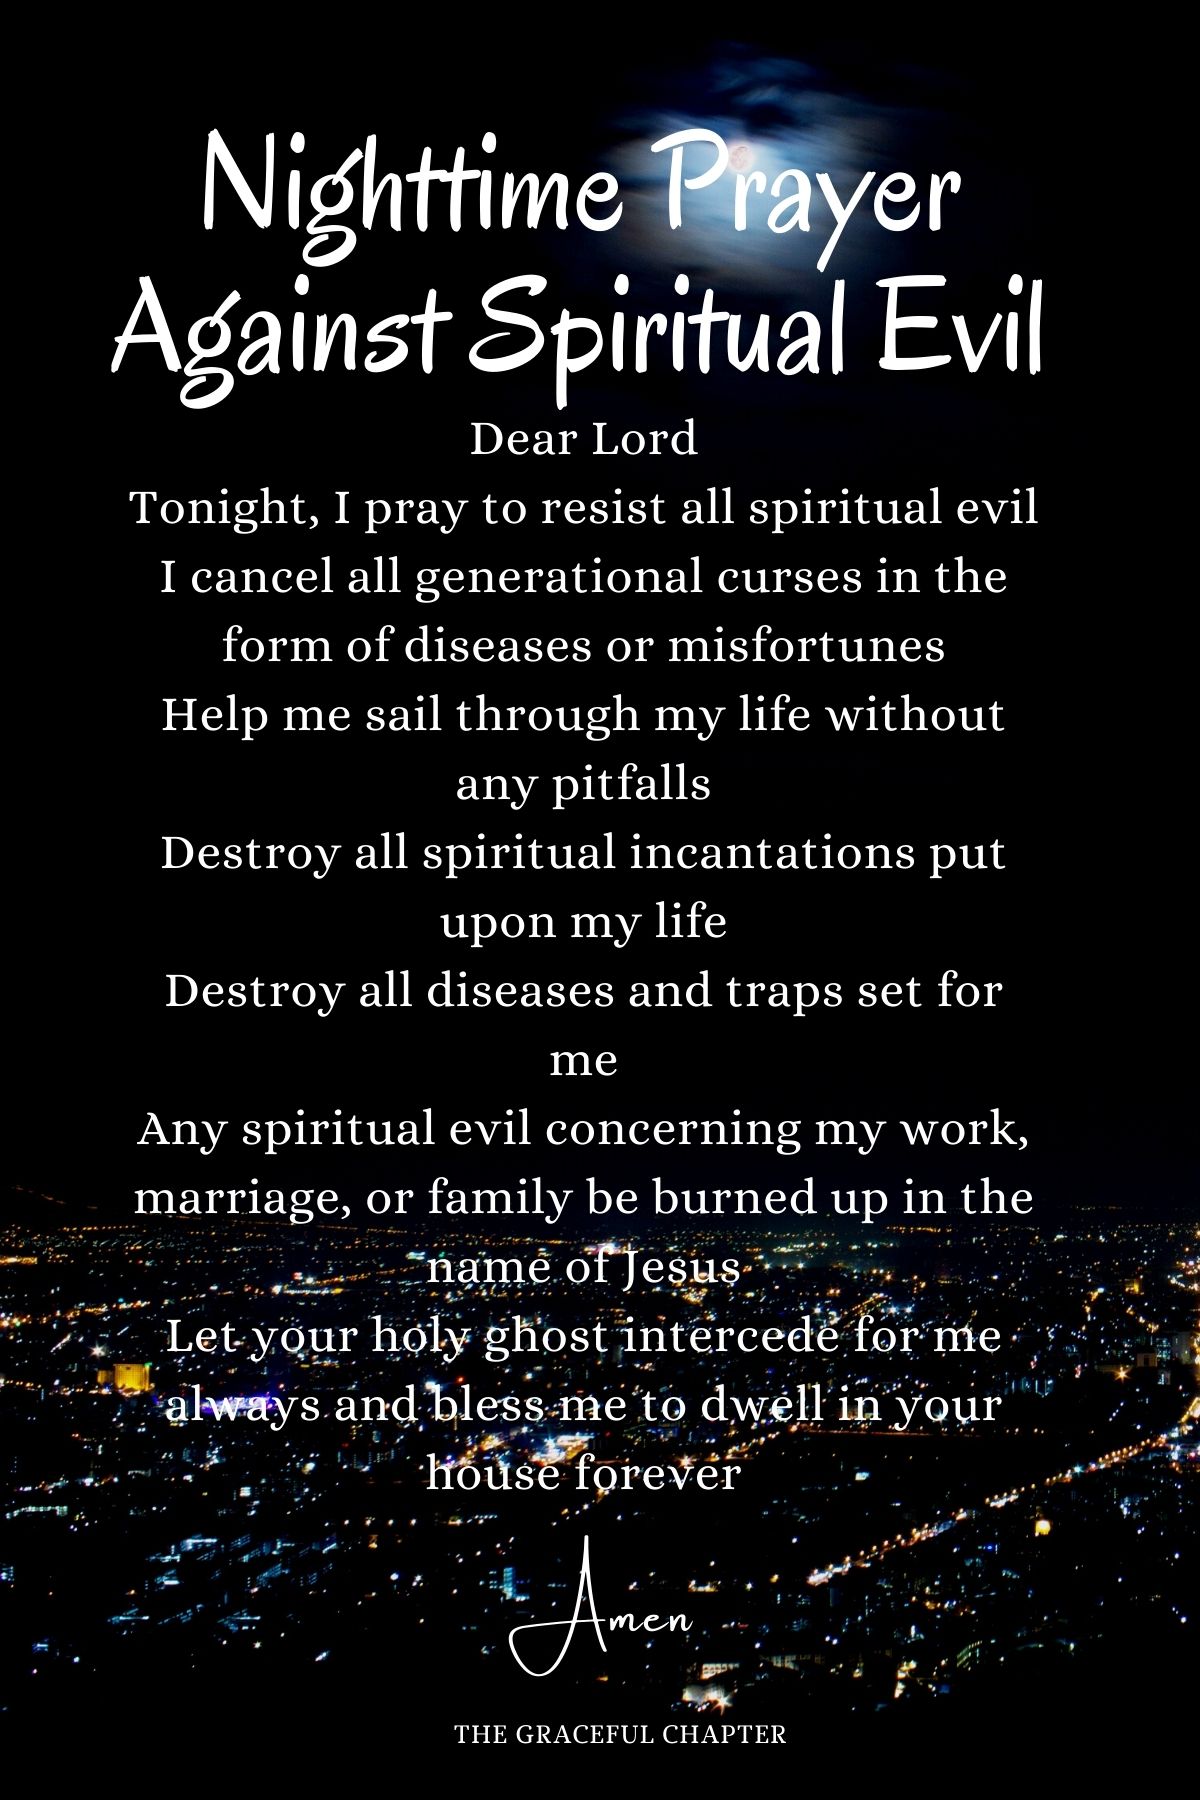 Nighttime prayer against spiritual evil